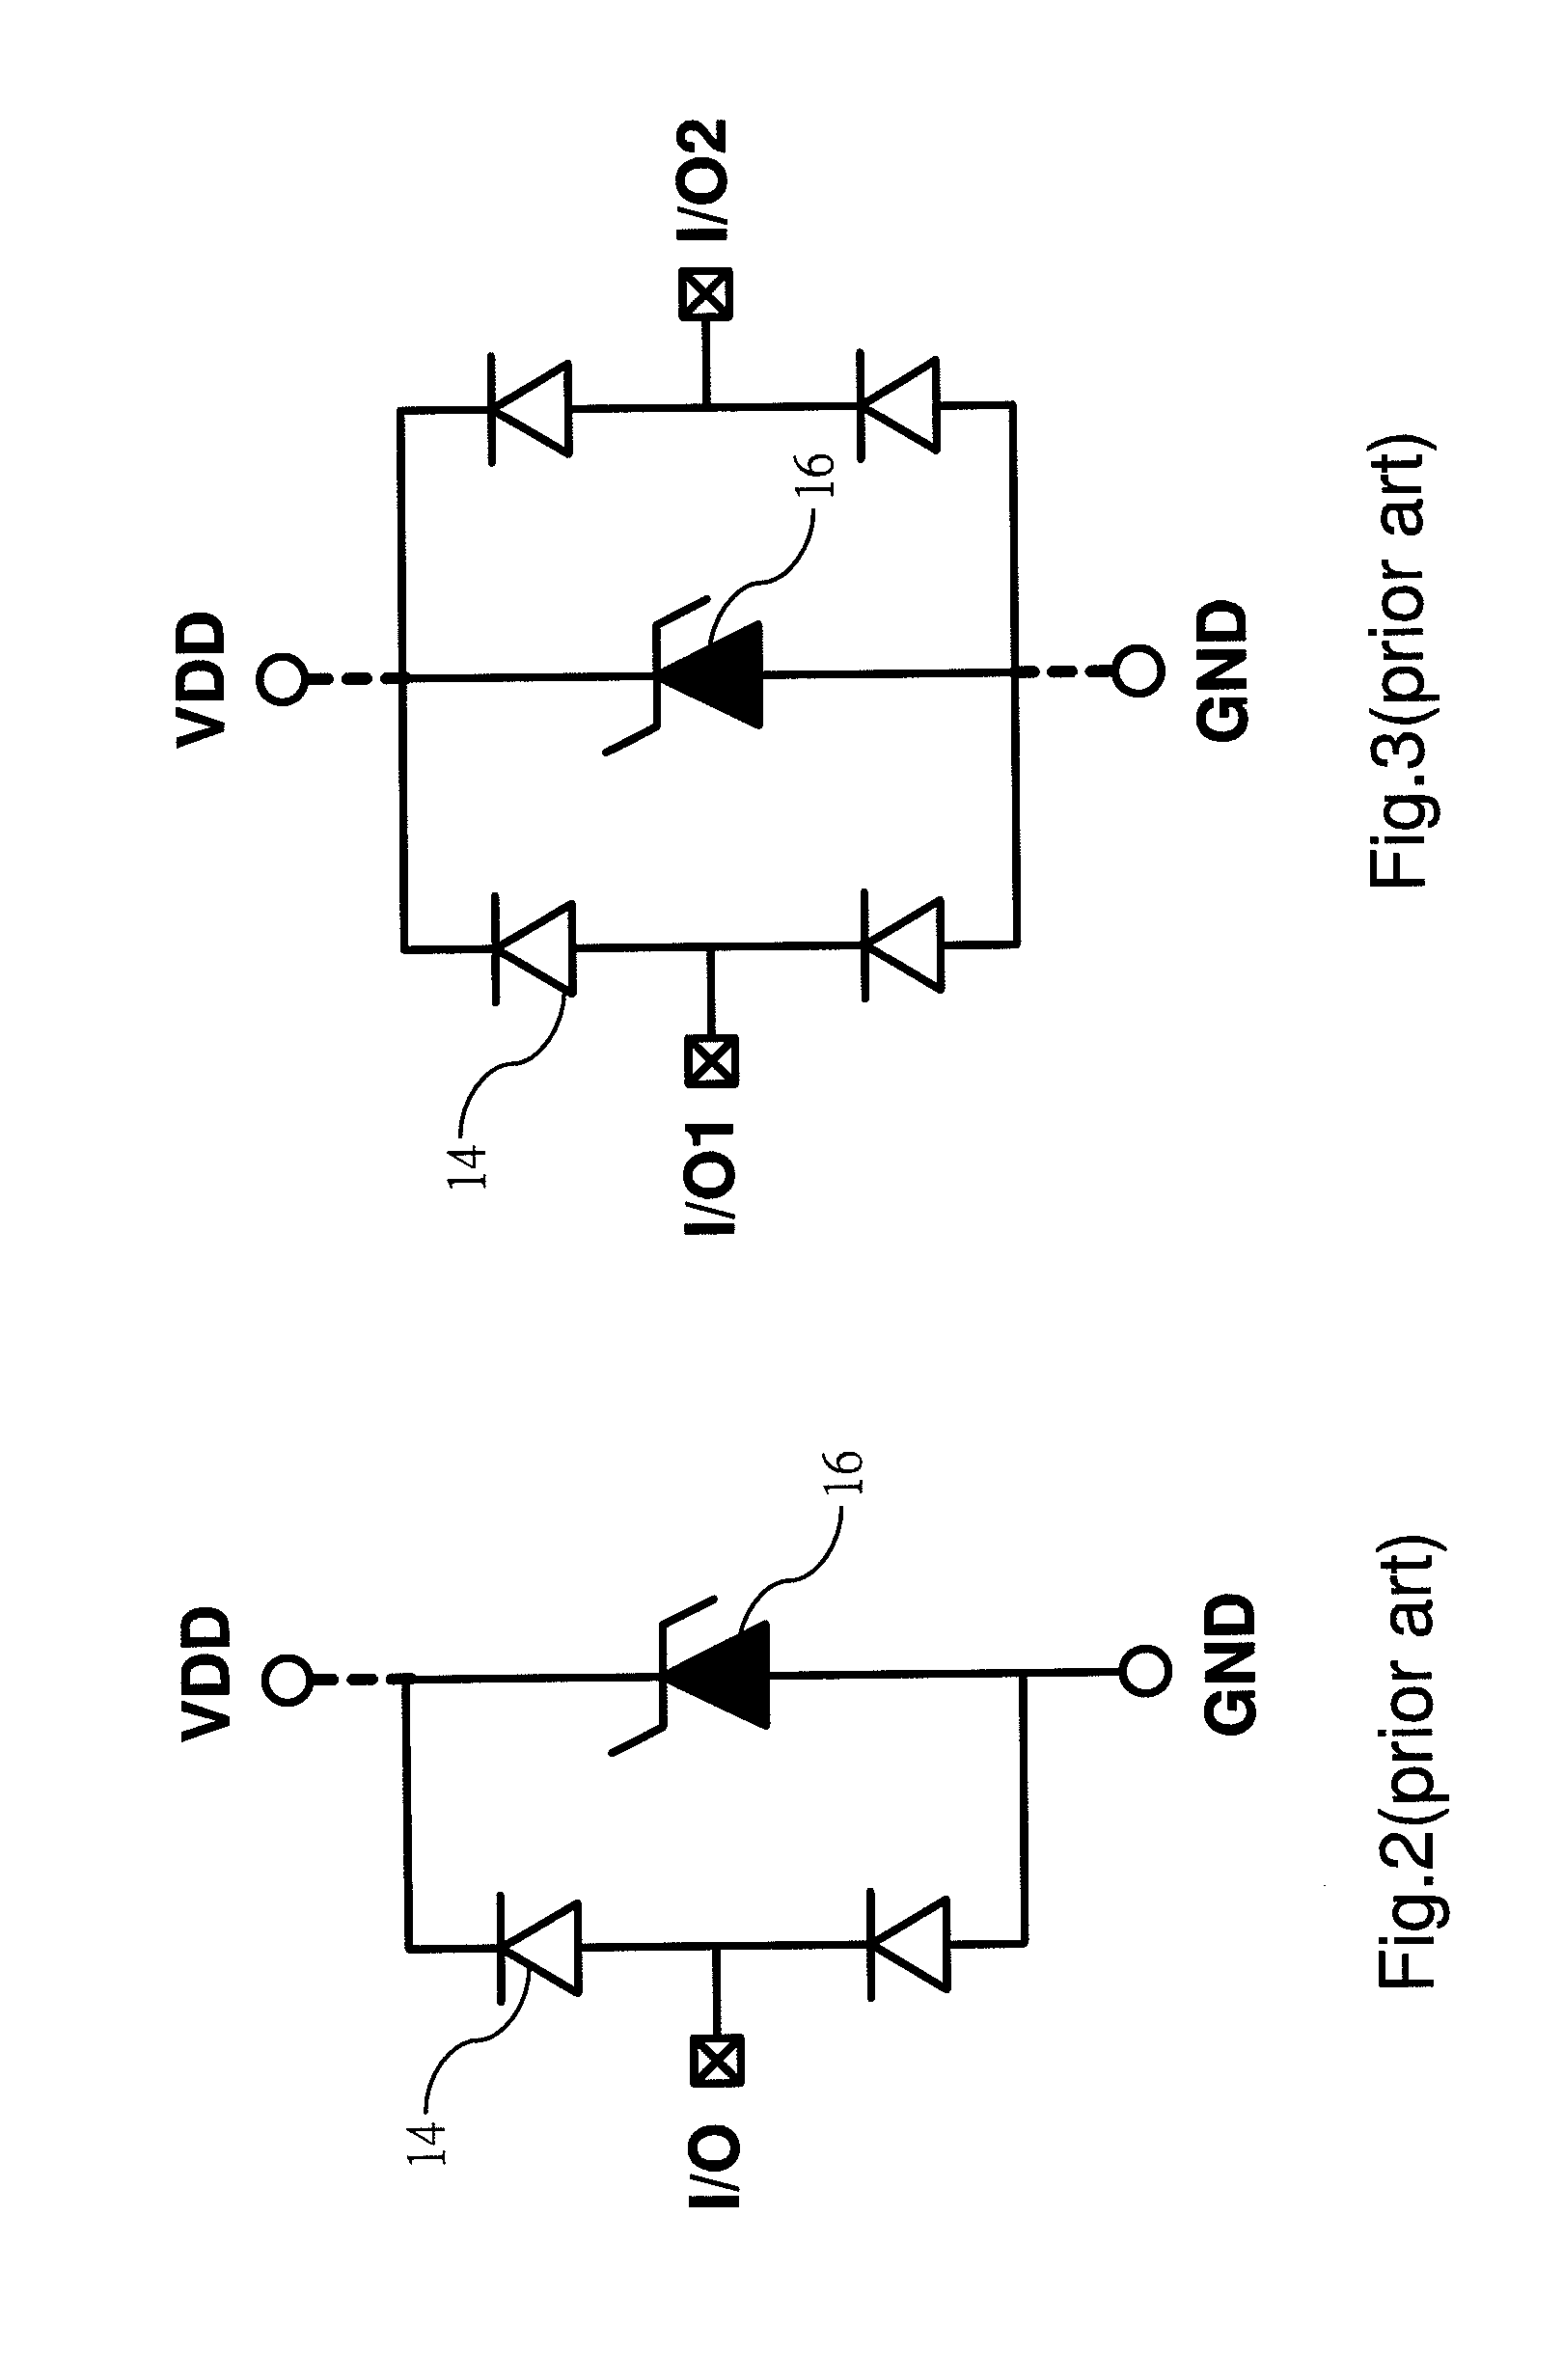 Low capacitance transient voltage suppressor